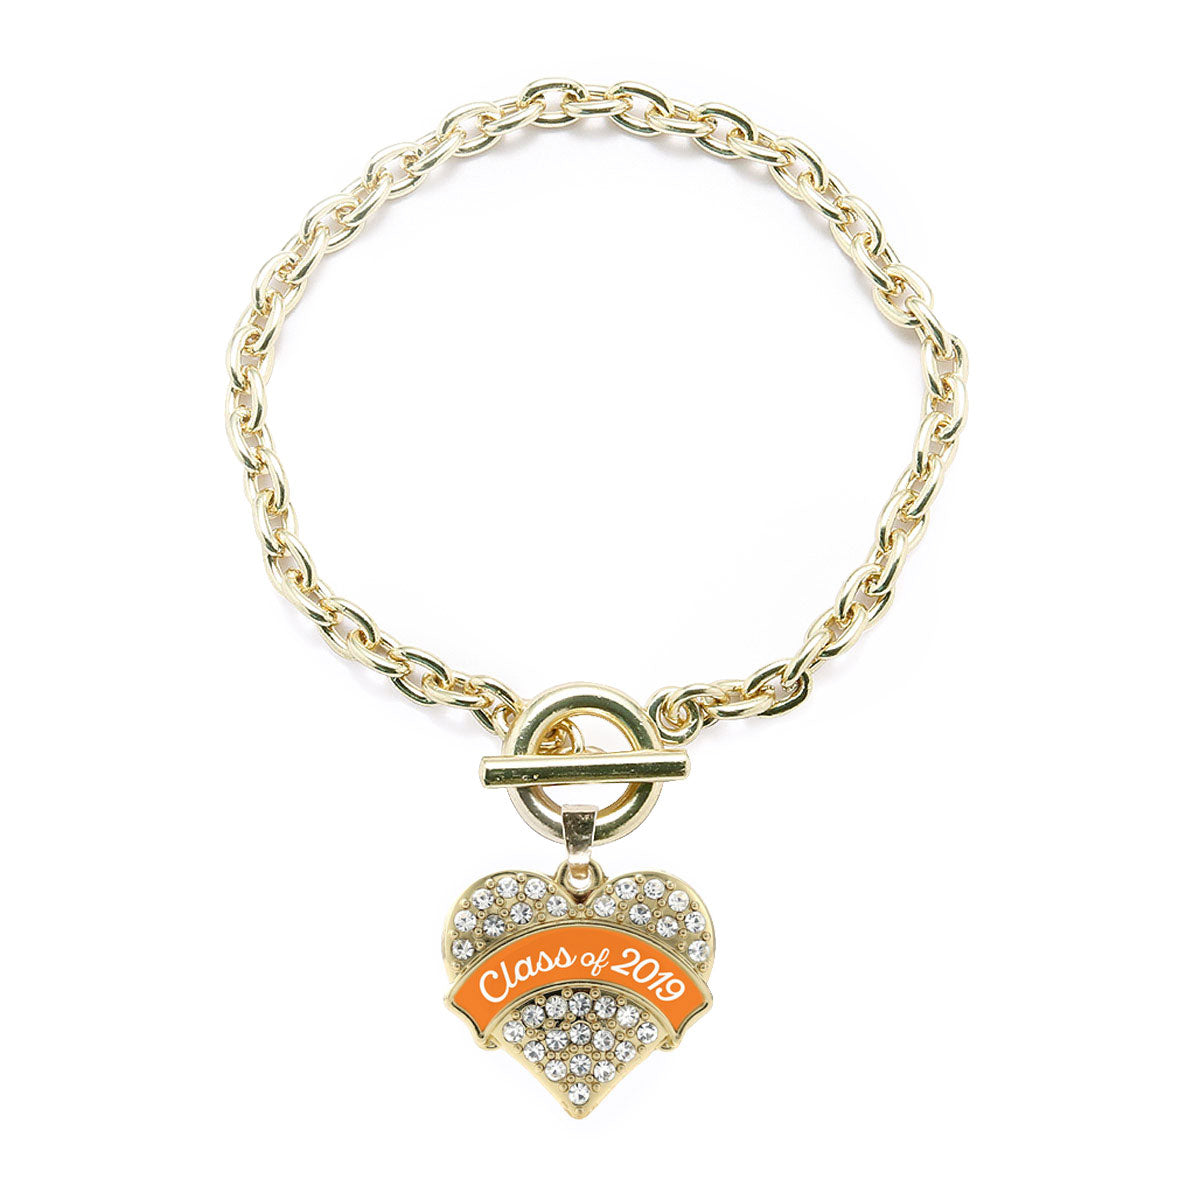 Gold Class of 2019 - Orange Pave Heart Charm Toggle Bracelet